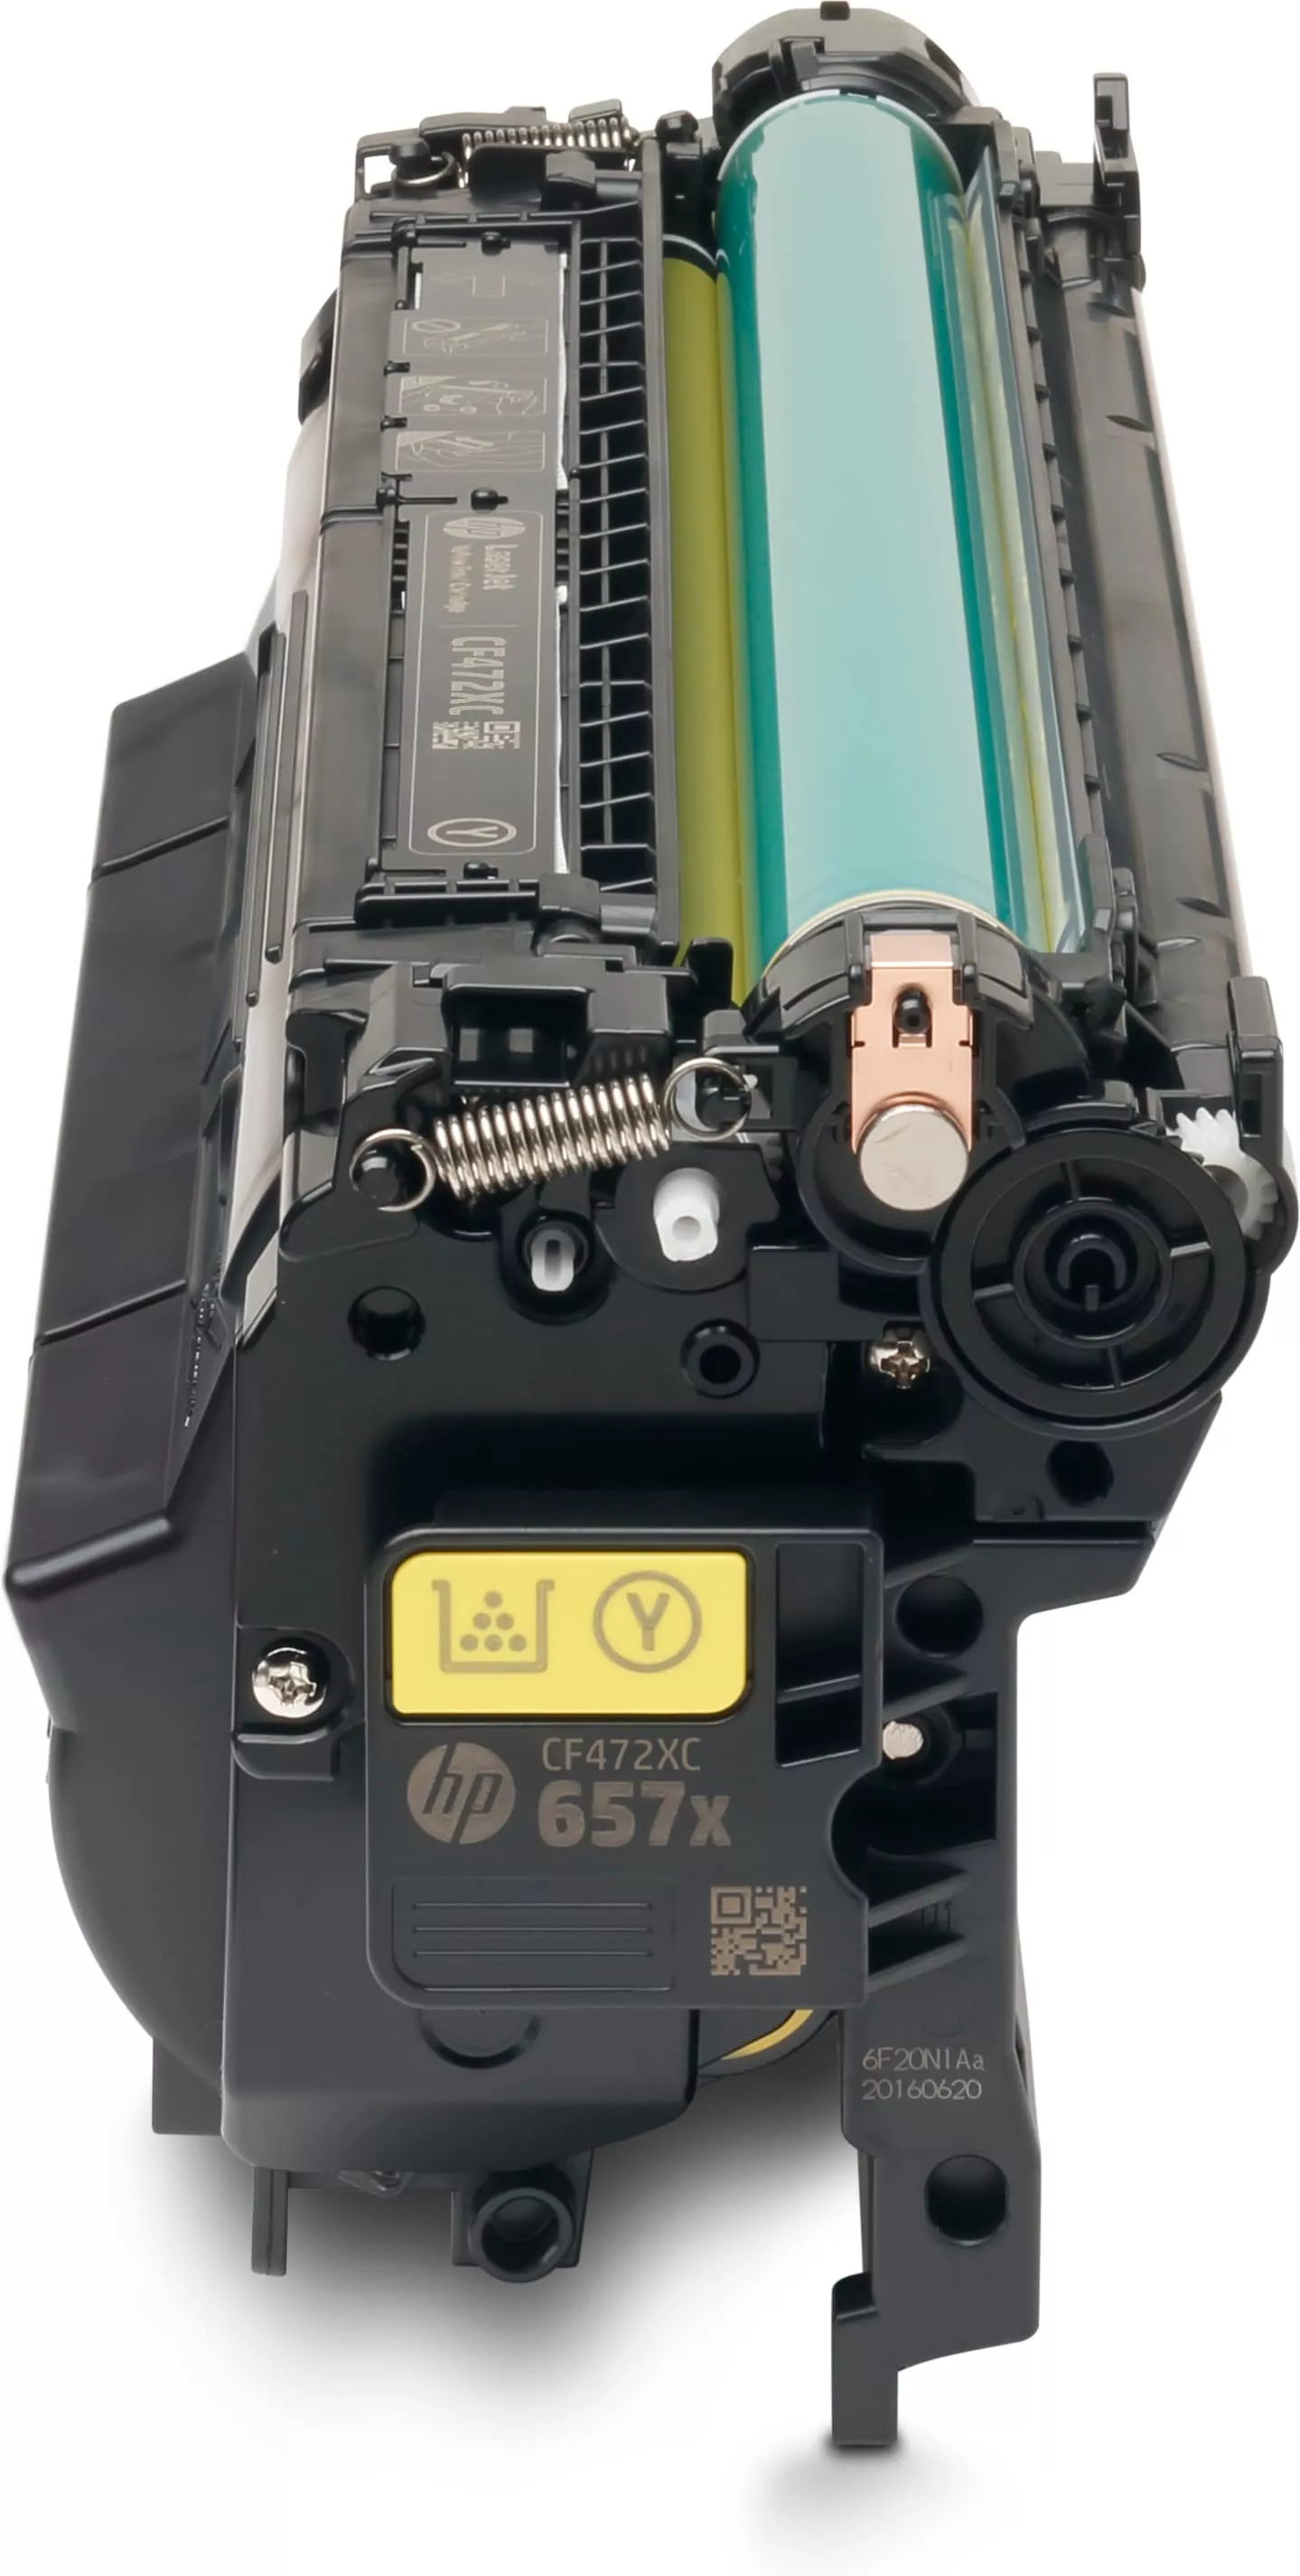 Vente HP 657X original LaserJet Toner cartridge CF472X Yellow HP au meilleur prix - visuel 2